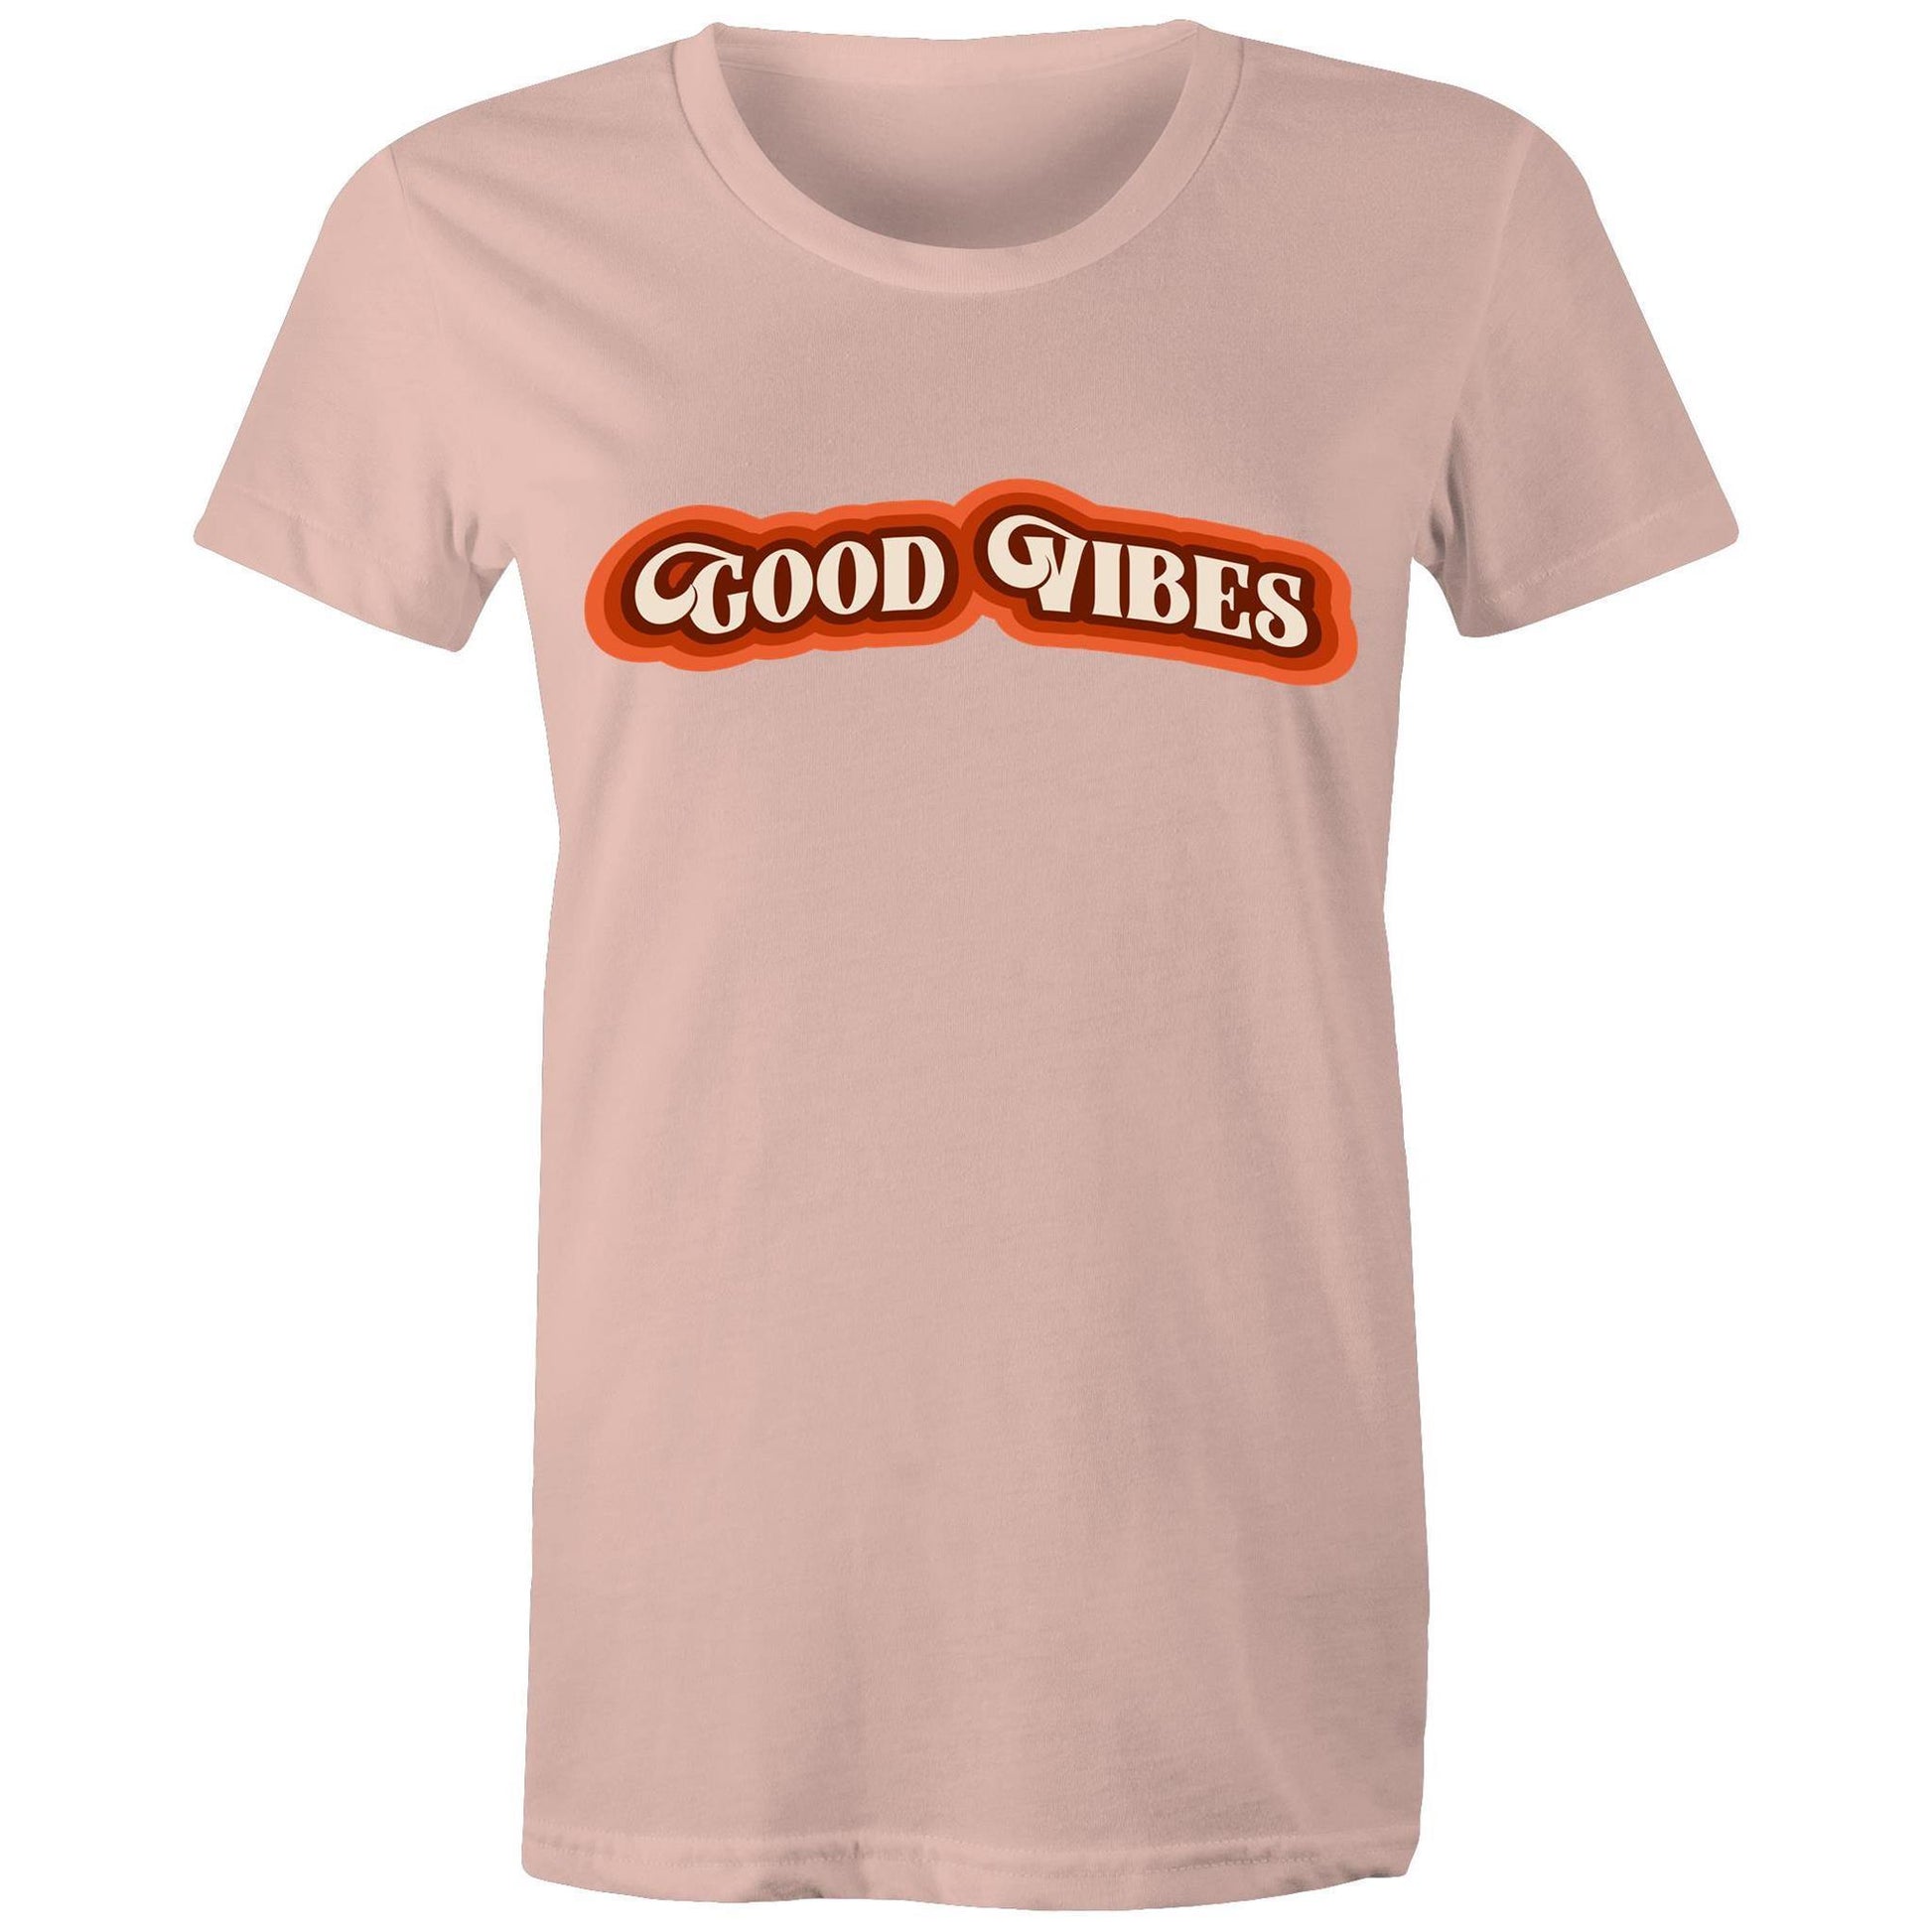 Good Vibes - Women's T-shirt Pale Pink Womens T-shirt Retro Womens